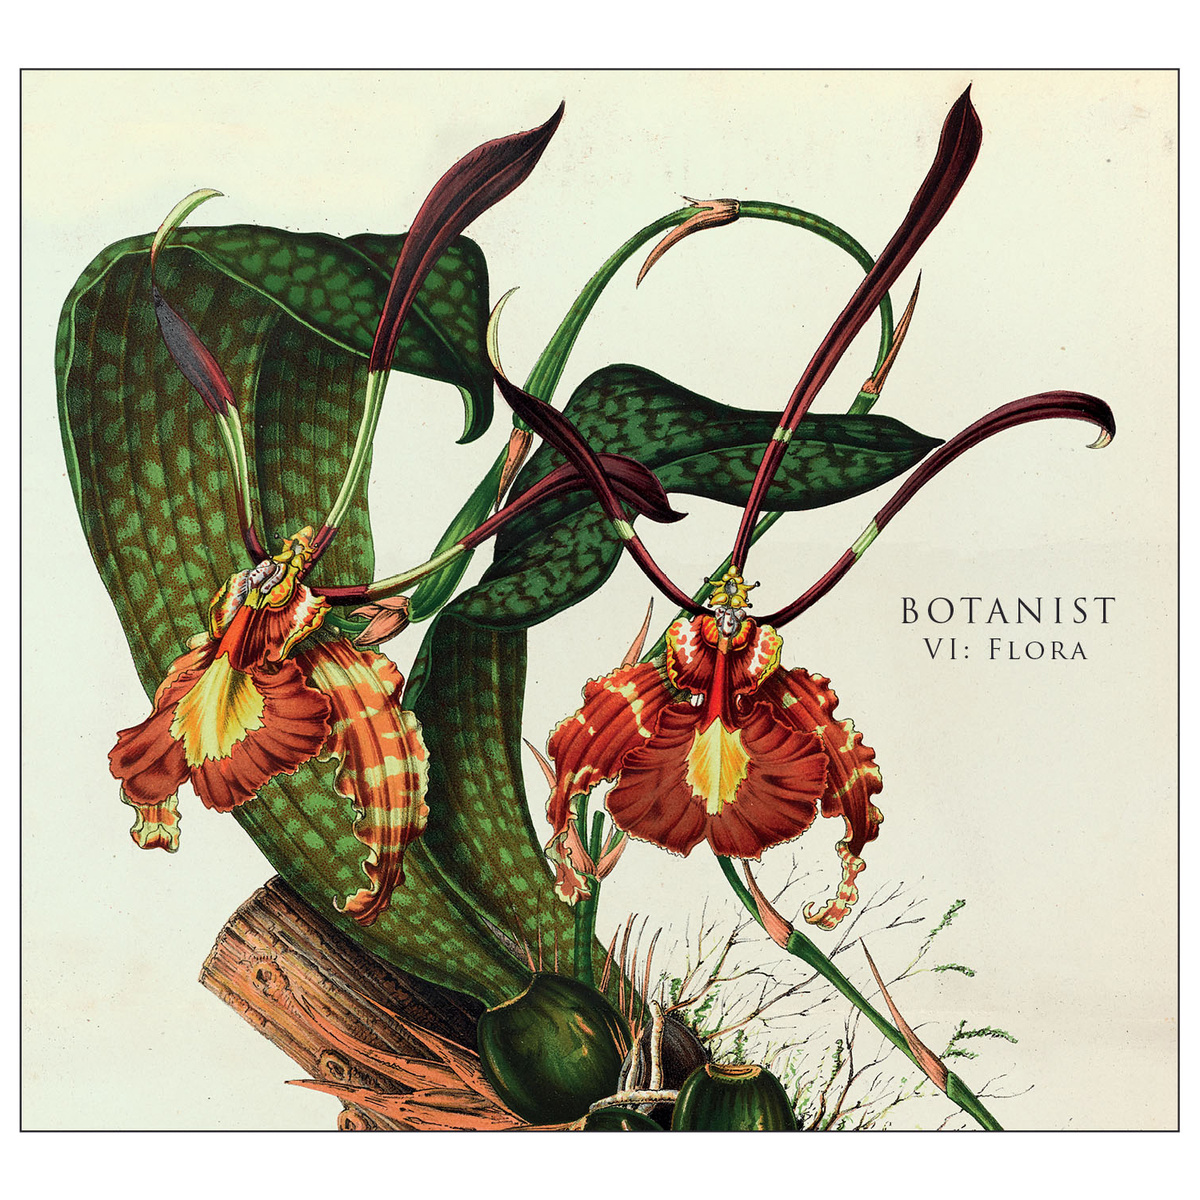 Botanist VI: Flora